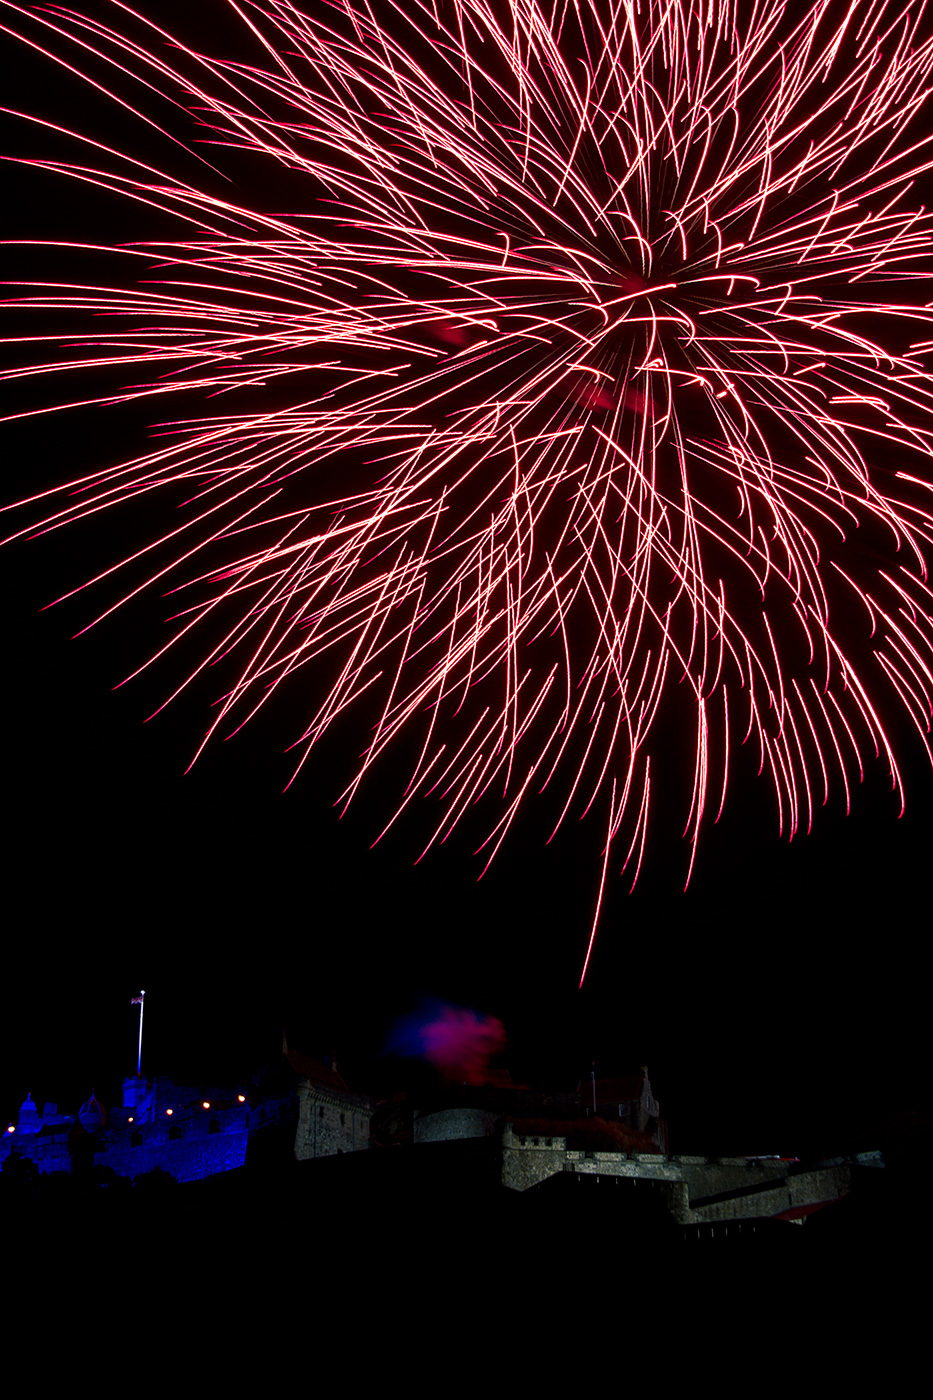 Edinburgh Tattoo Fireworks - 10th August 2013